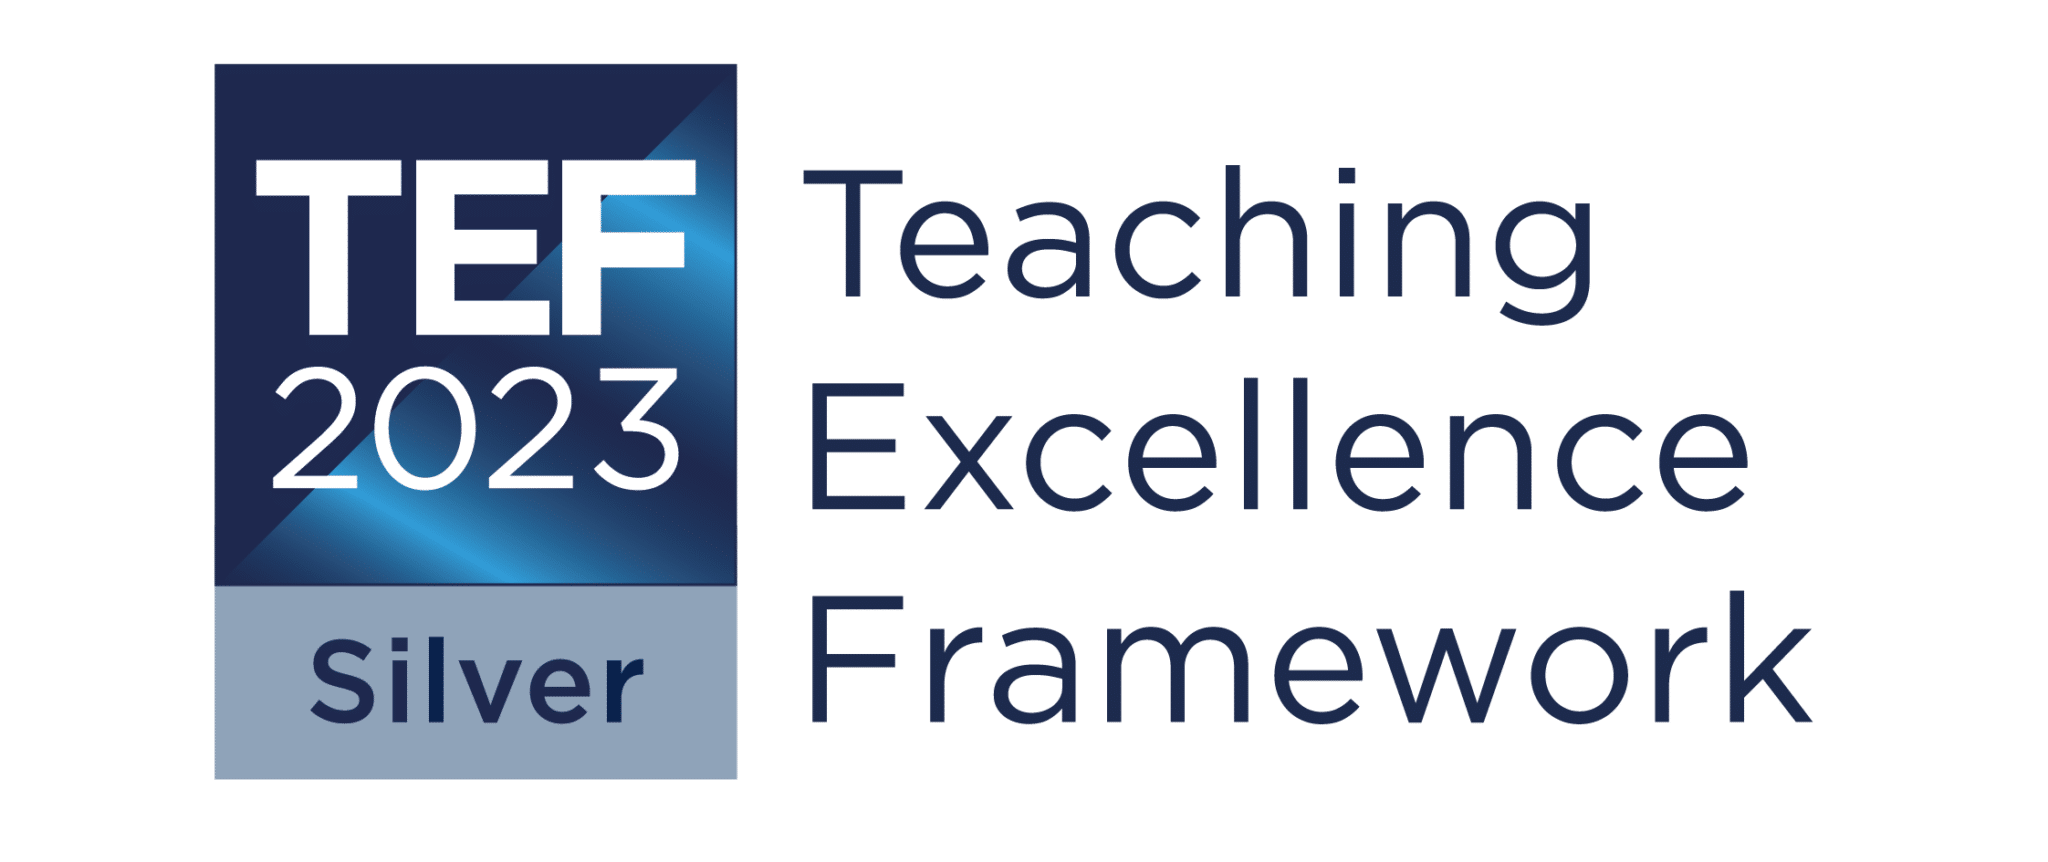 Teaching Excellence Framework 2023 Silver